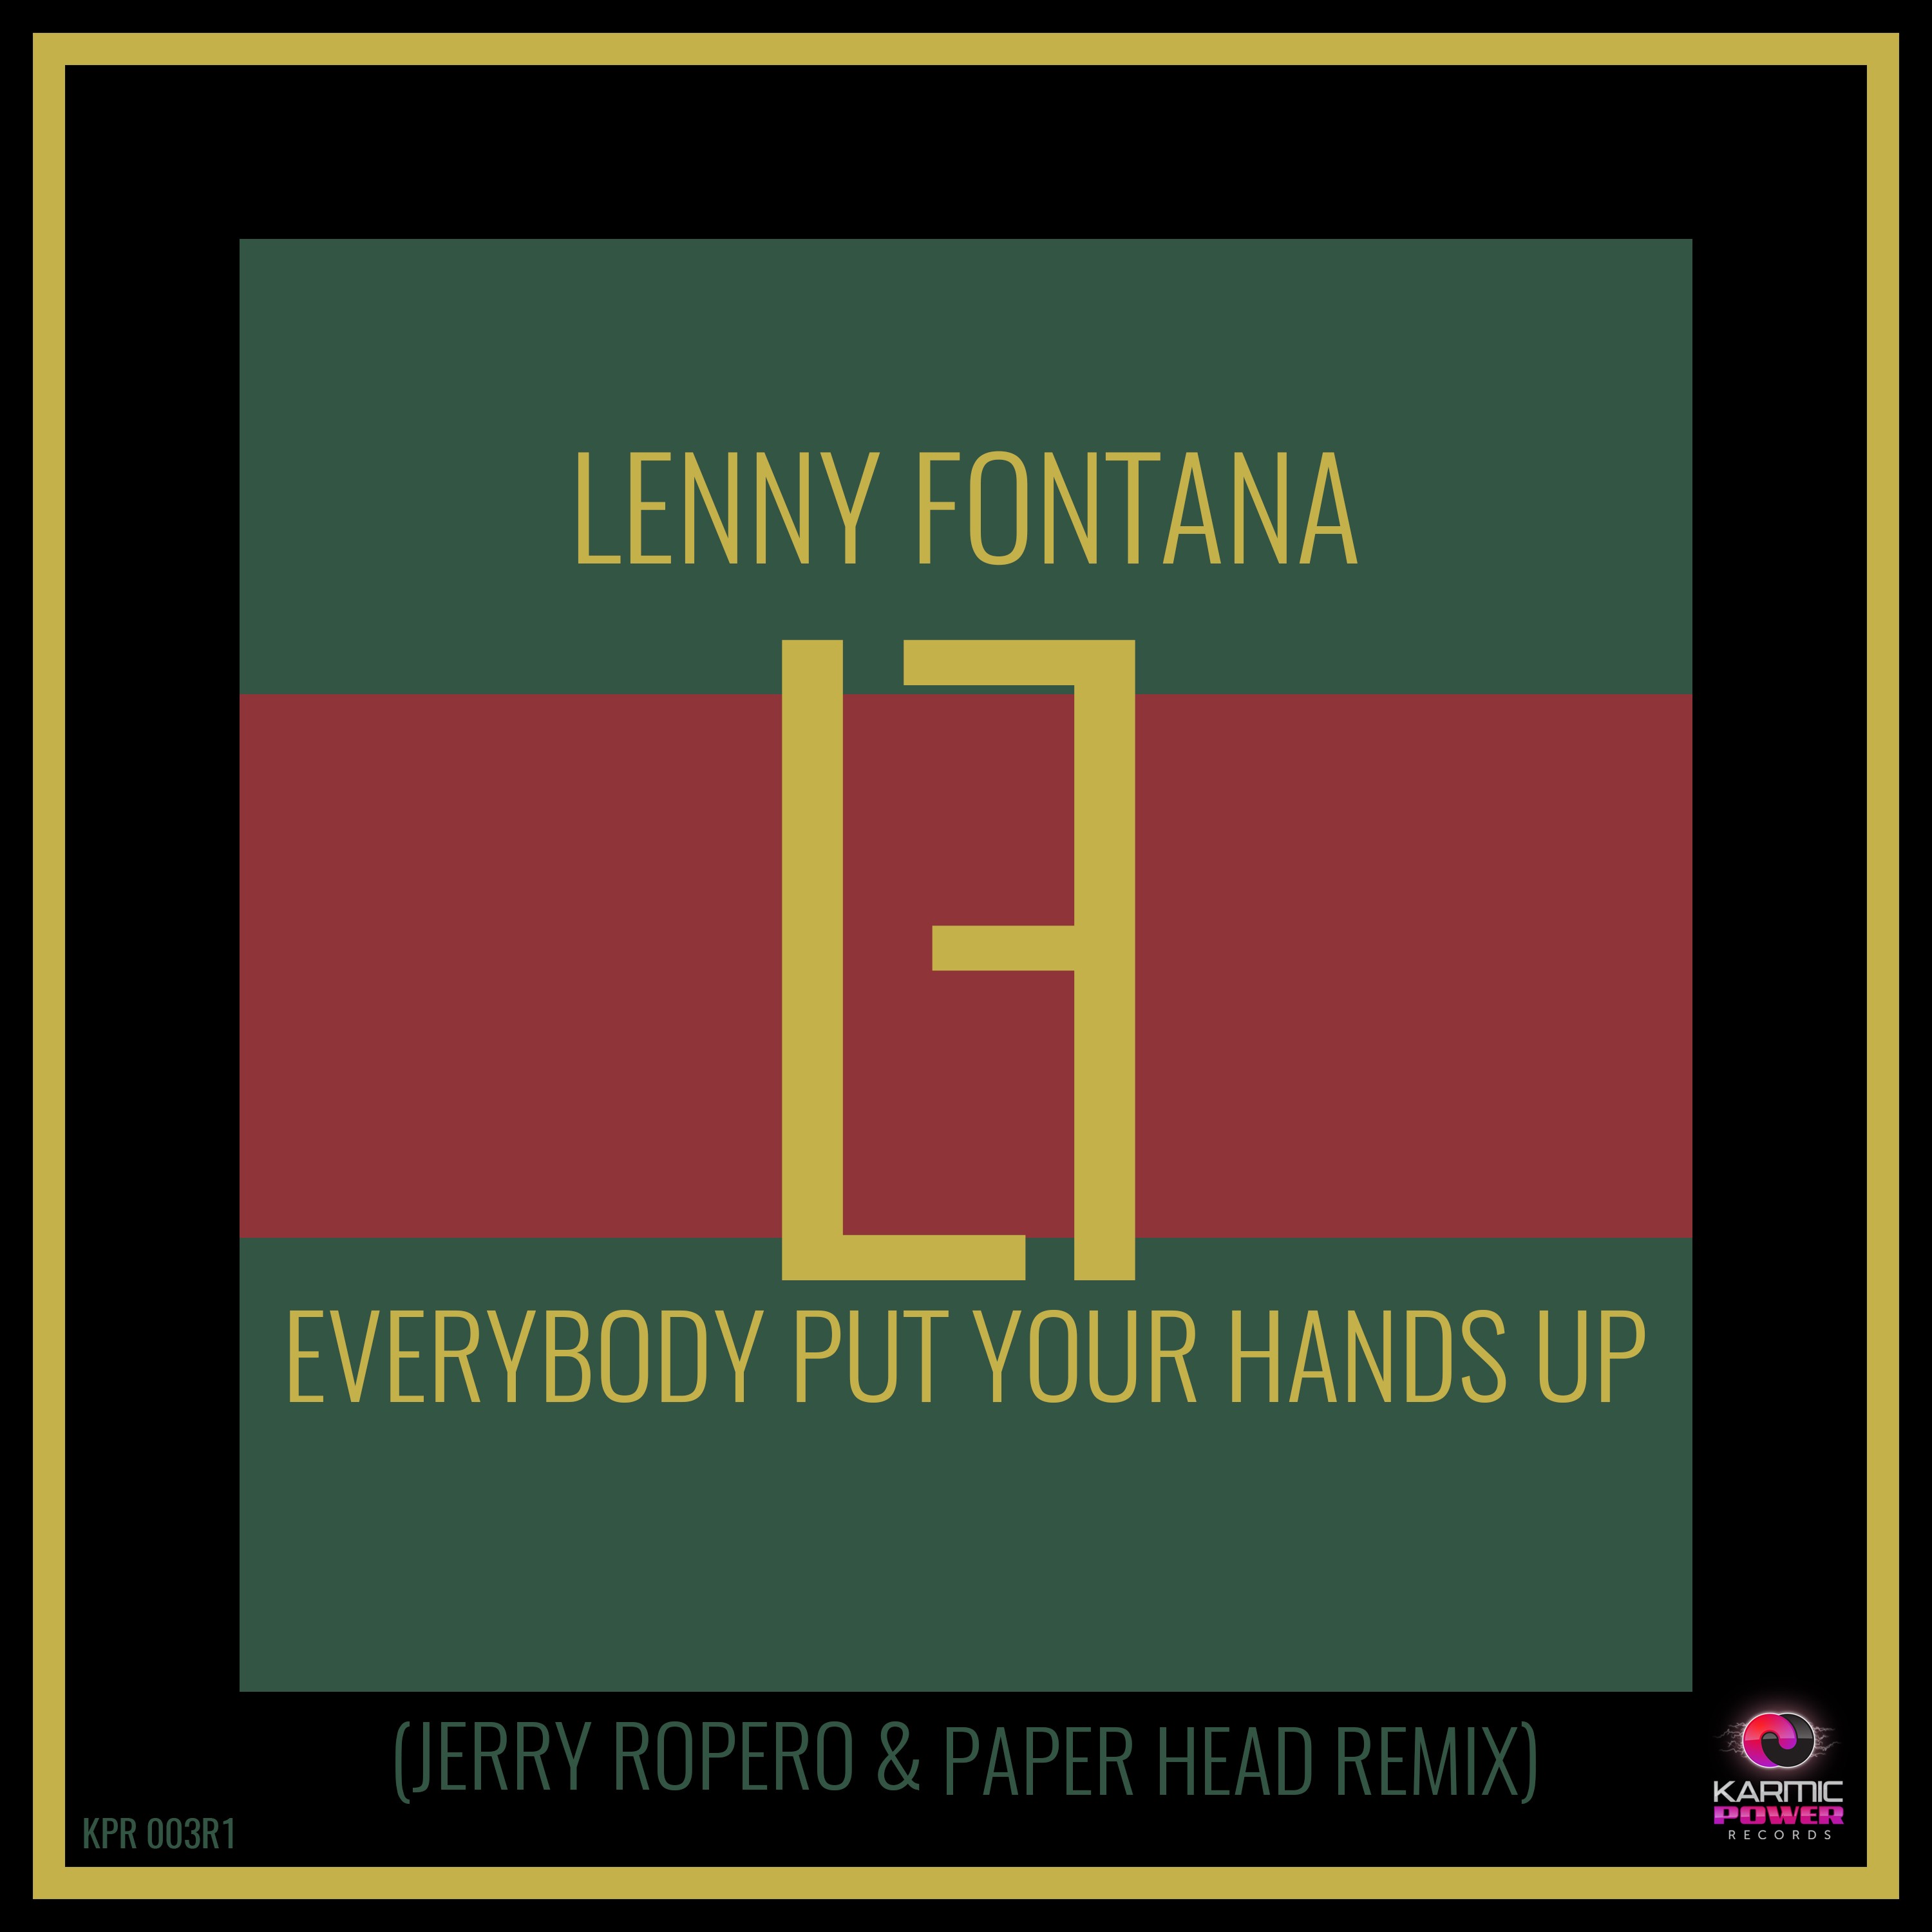 KPR 003R1 Lenny Fontana - Everybody Put Your Hands Up (Jerry Ropero & Paper Head Remix).jpg